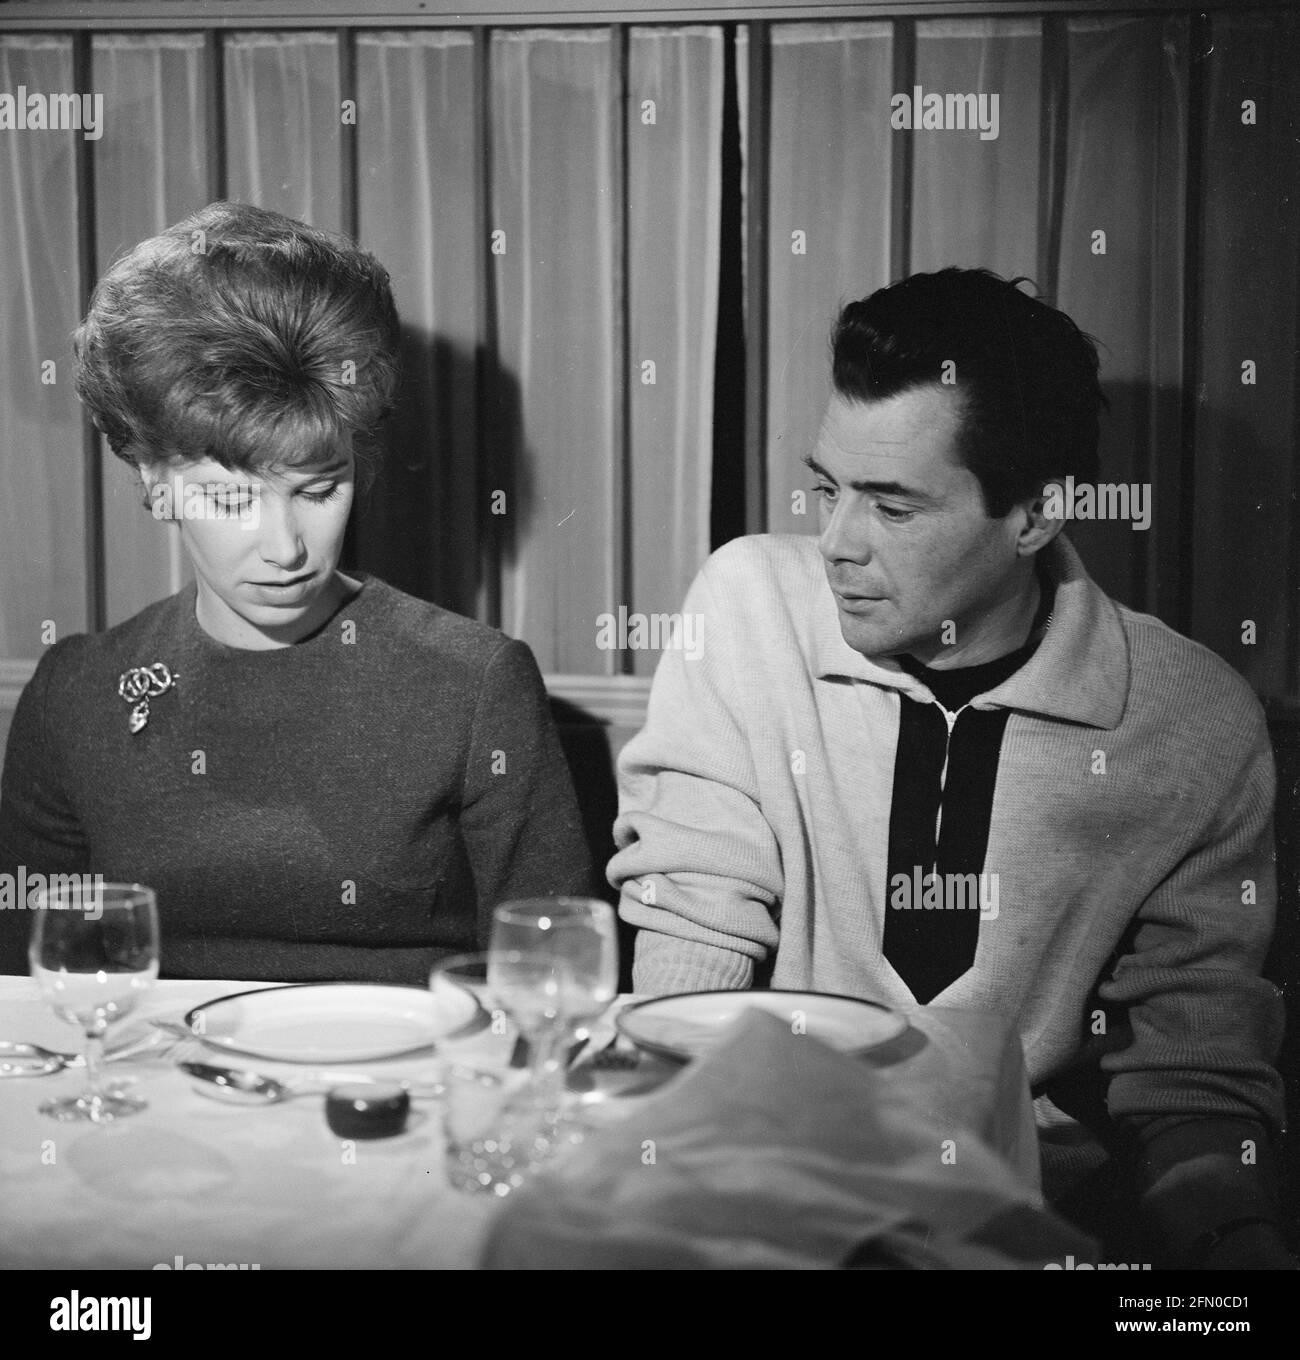 The Servant (1963) Wendy Craig, Dirk Bogarde Date: 1963 Stock Photo - Alamy